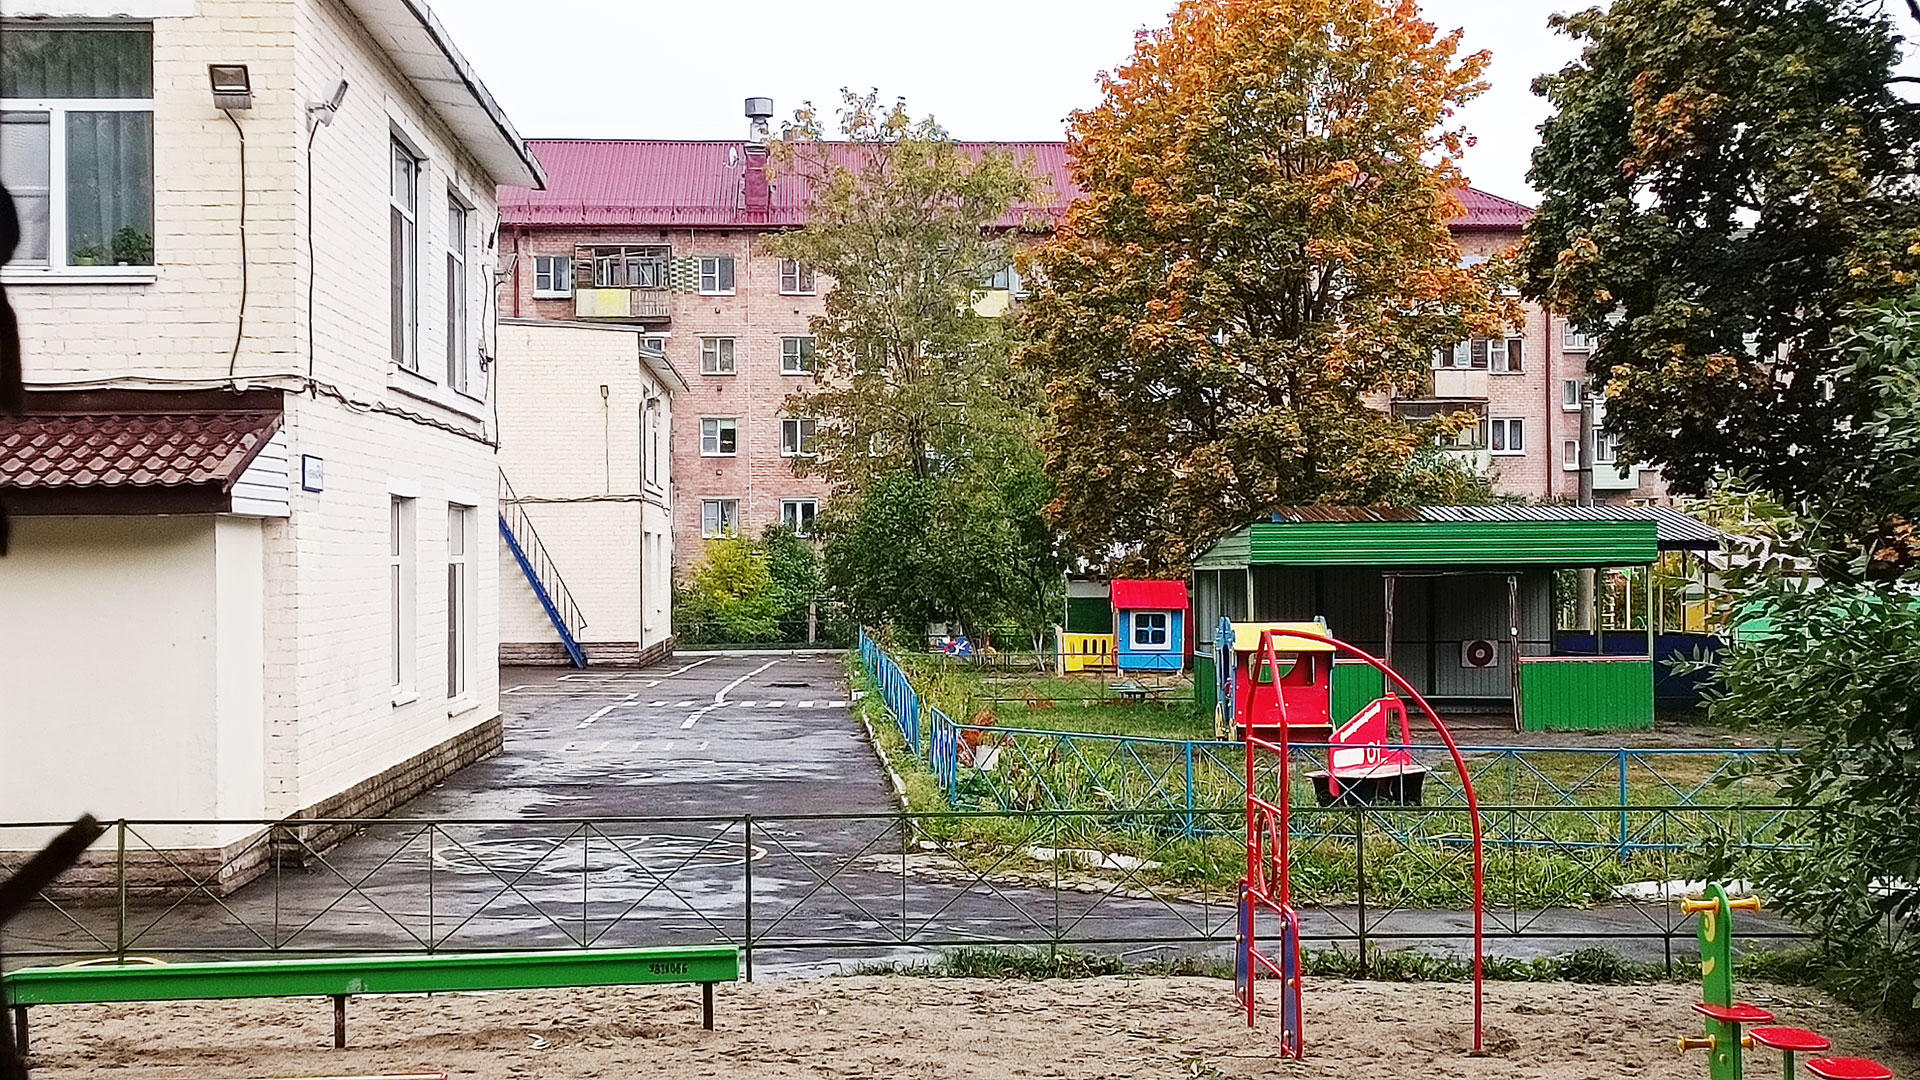 Детский сад 89 Ярославль: общий вид территории и зданий.